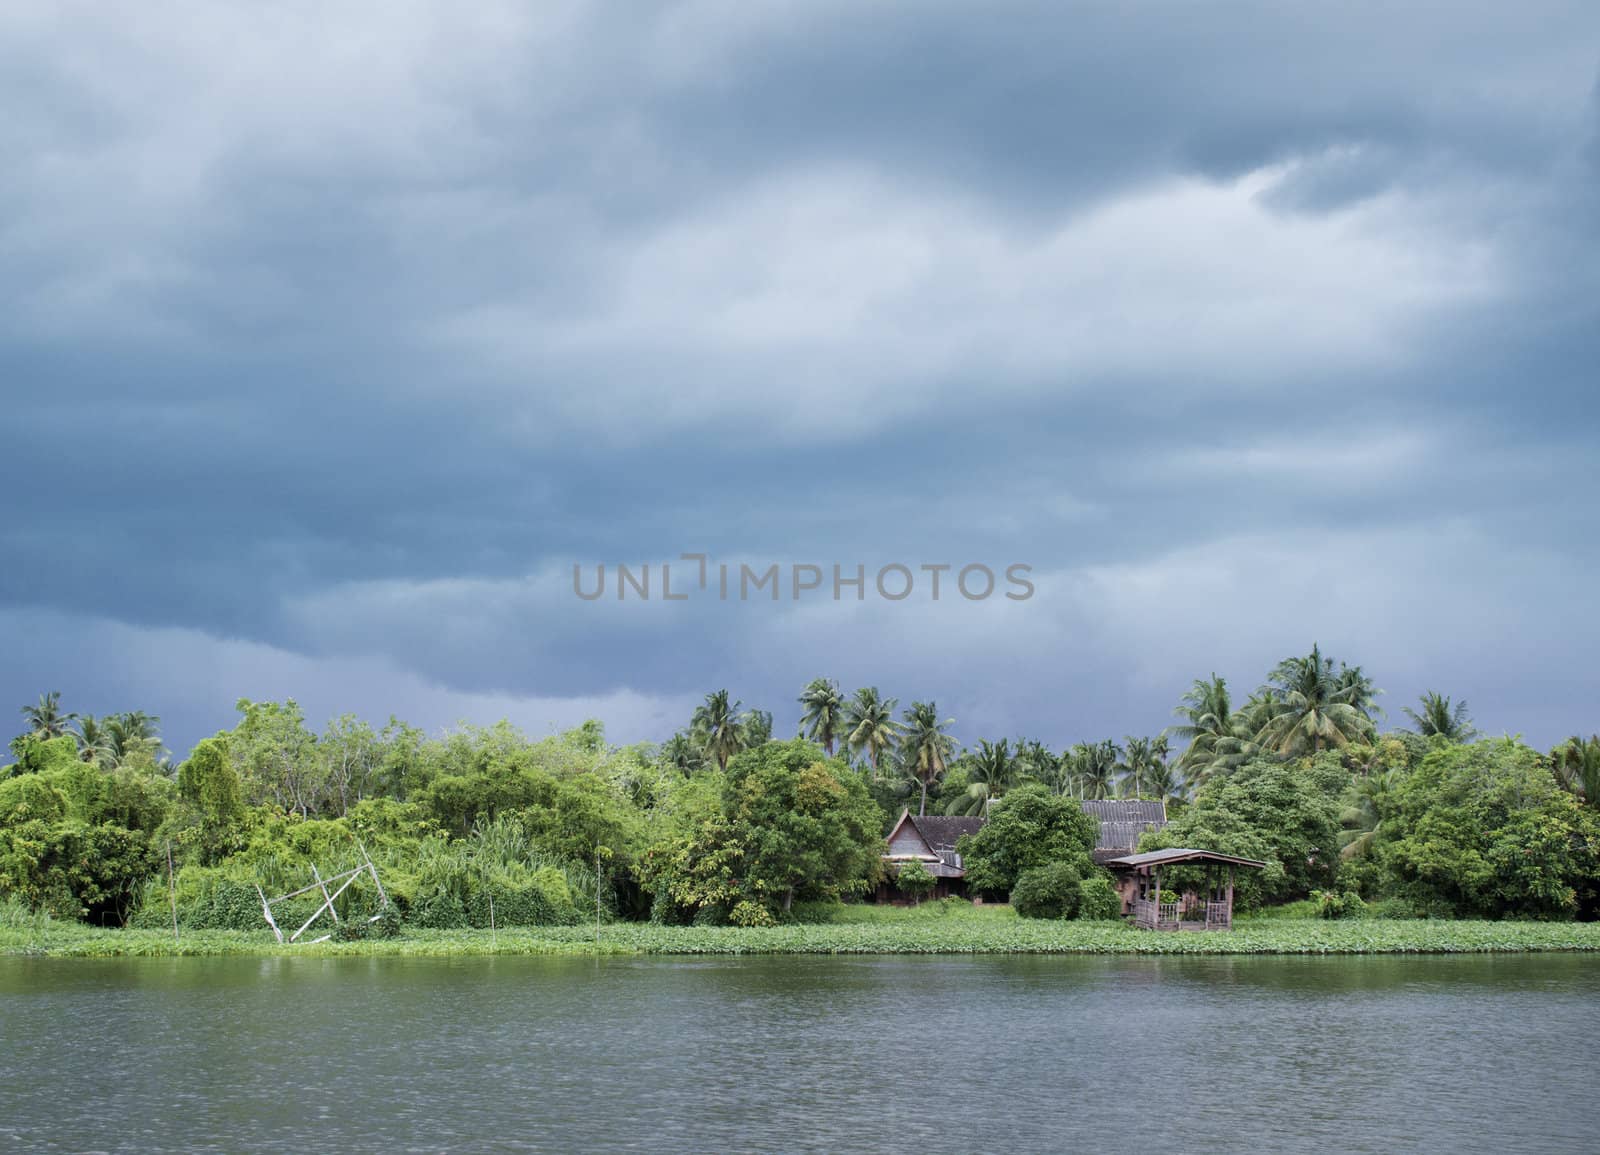 river house during monsoon rainy season in thailand